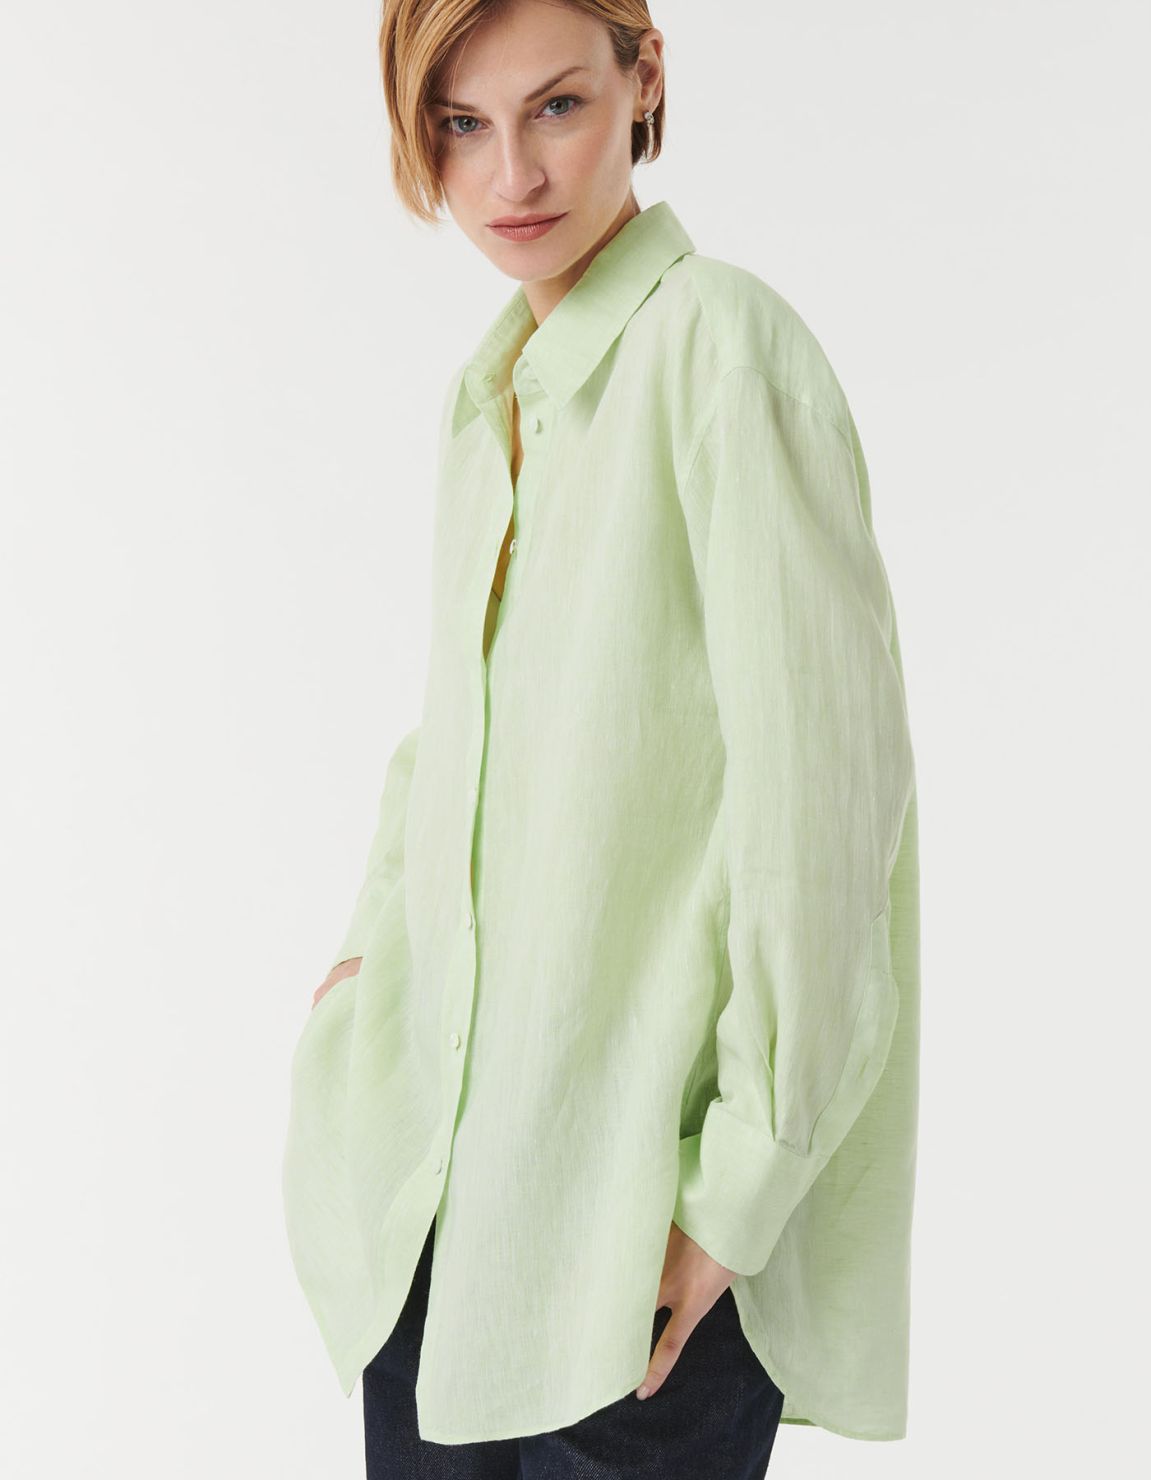 Shirt Green Apple Linen Solid colour Over 5